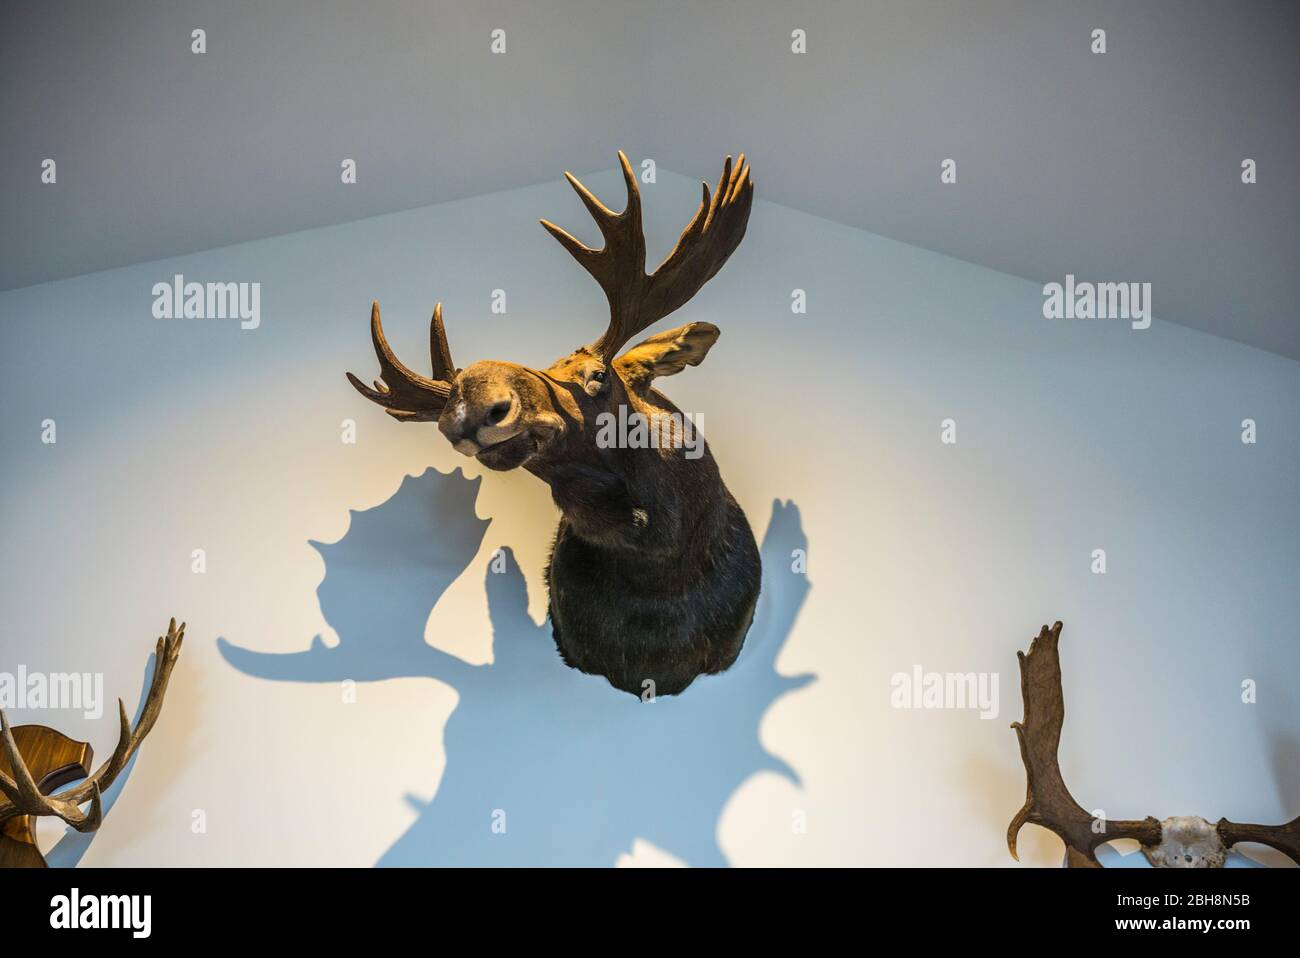 USA, Maine, Machias, stuffed moose head Stock Photo